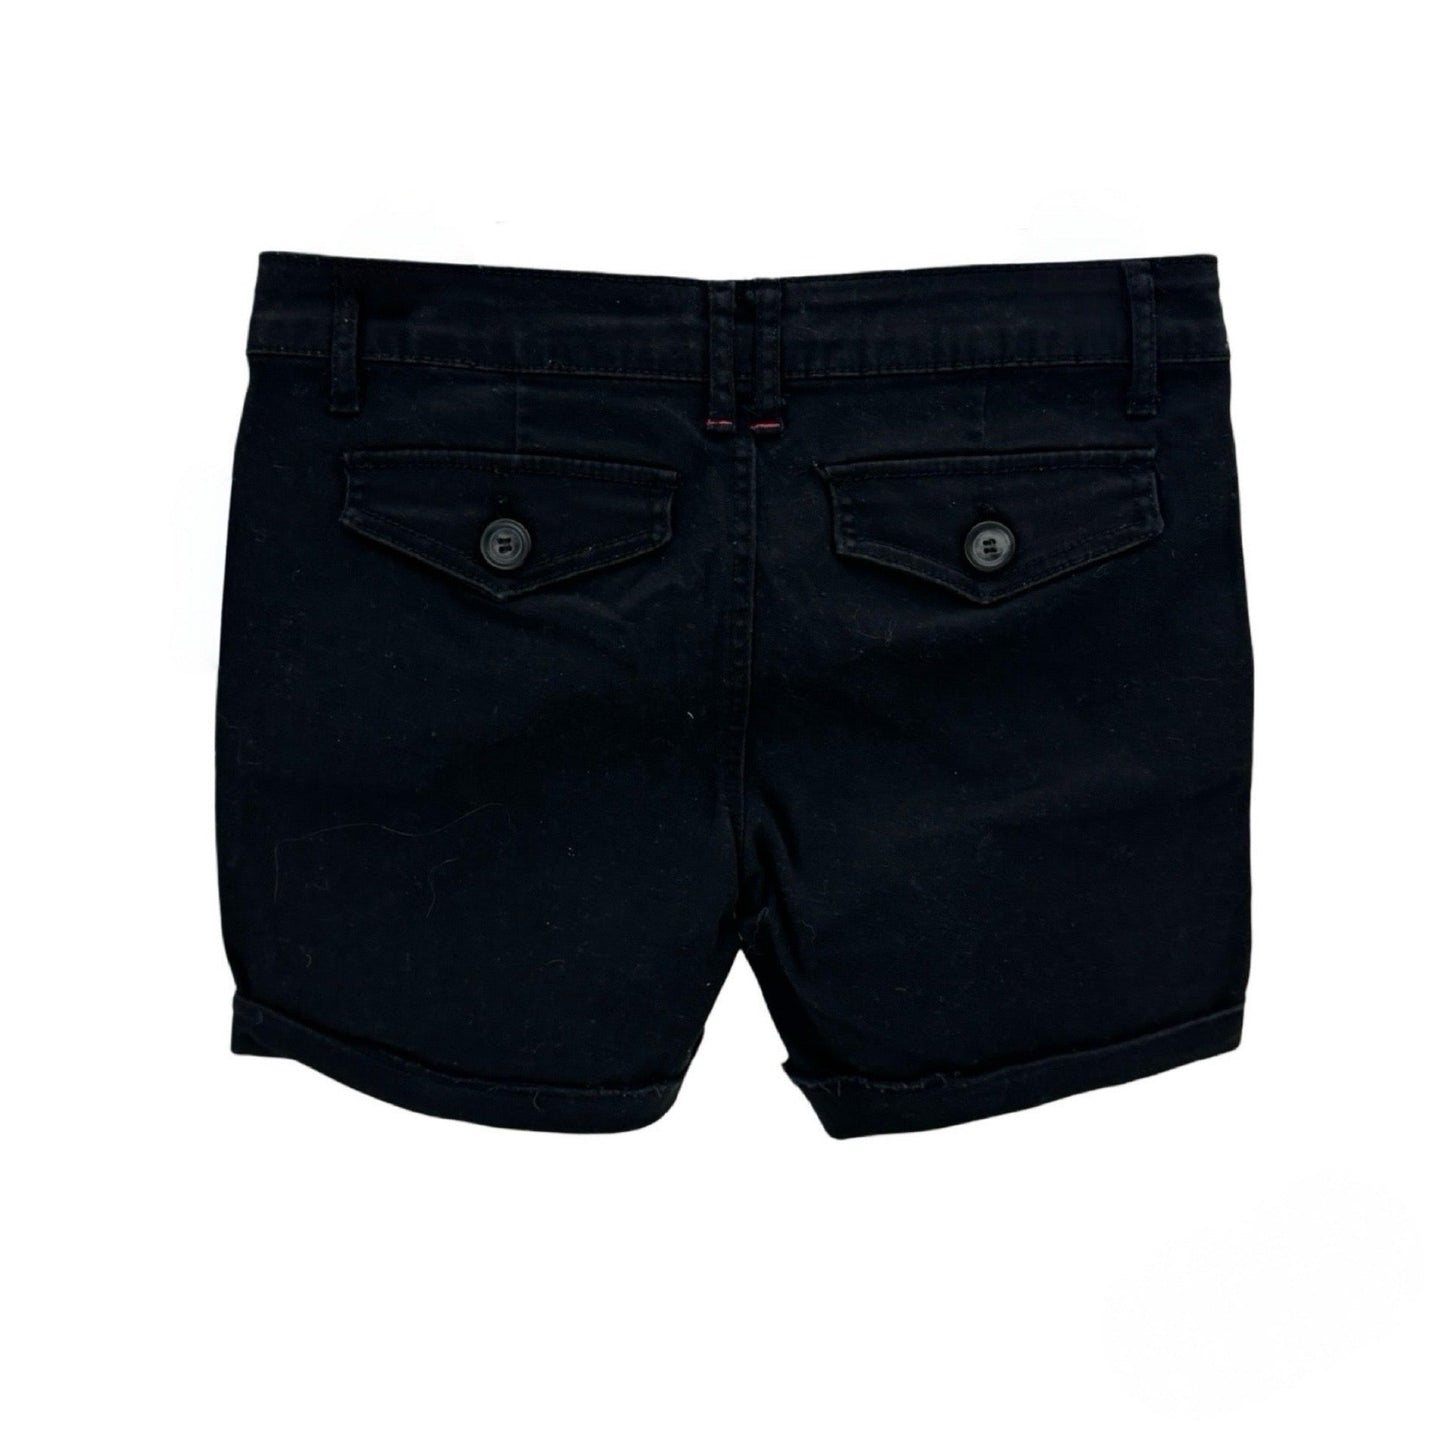 Shorts By Wallflower  Size: 5